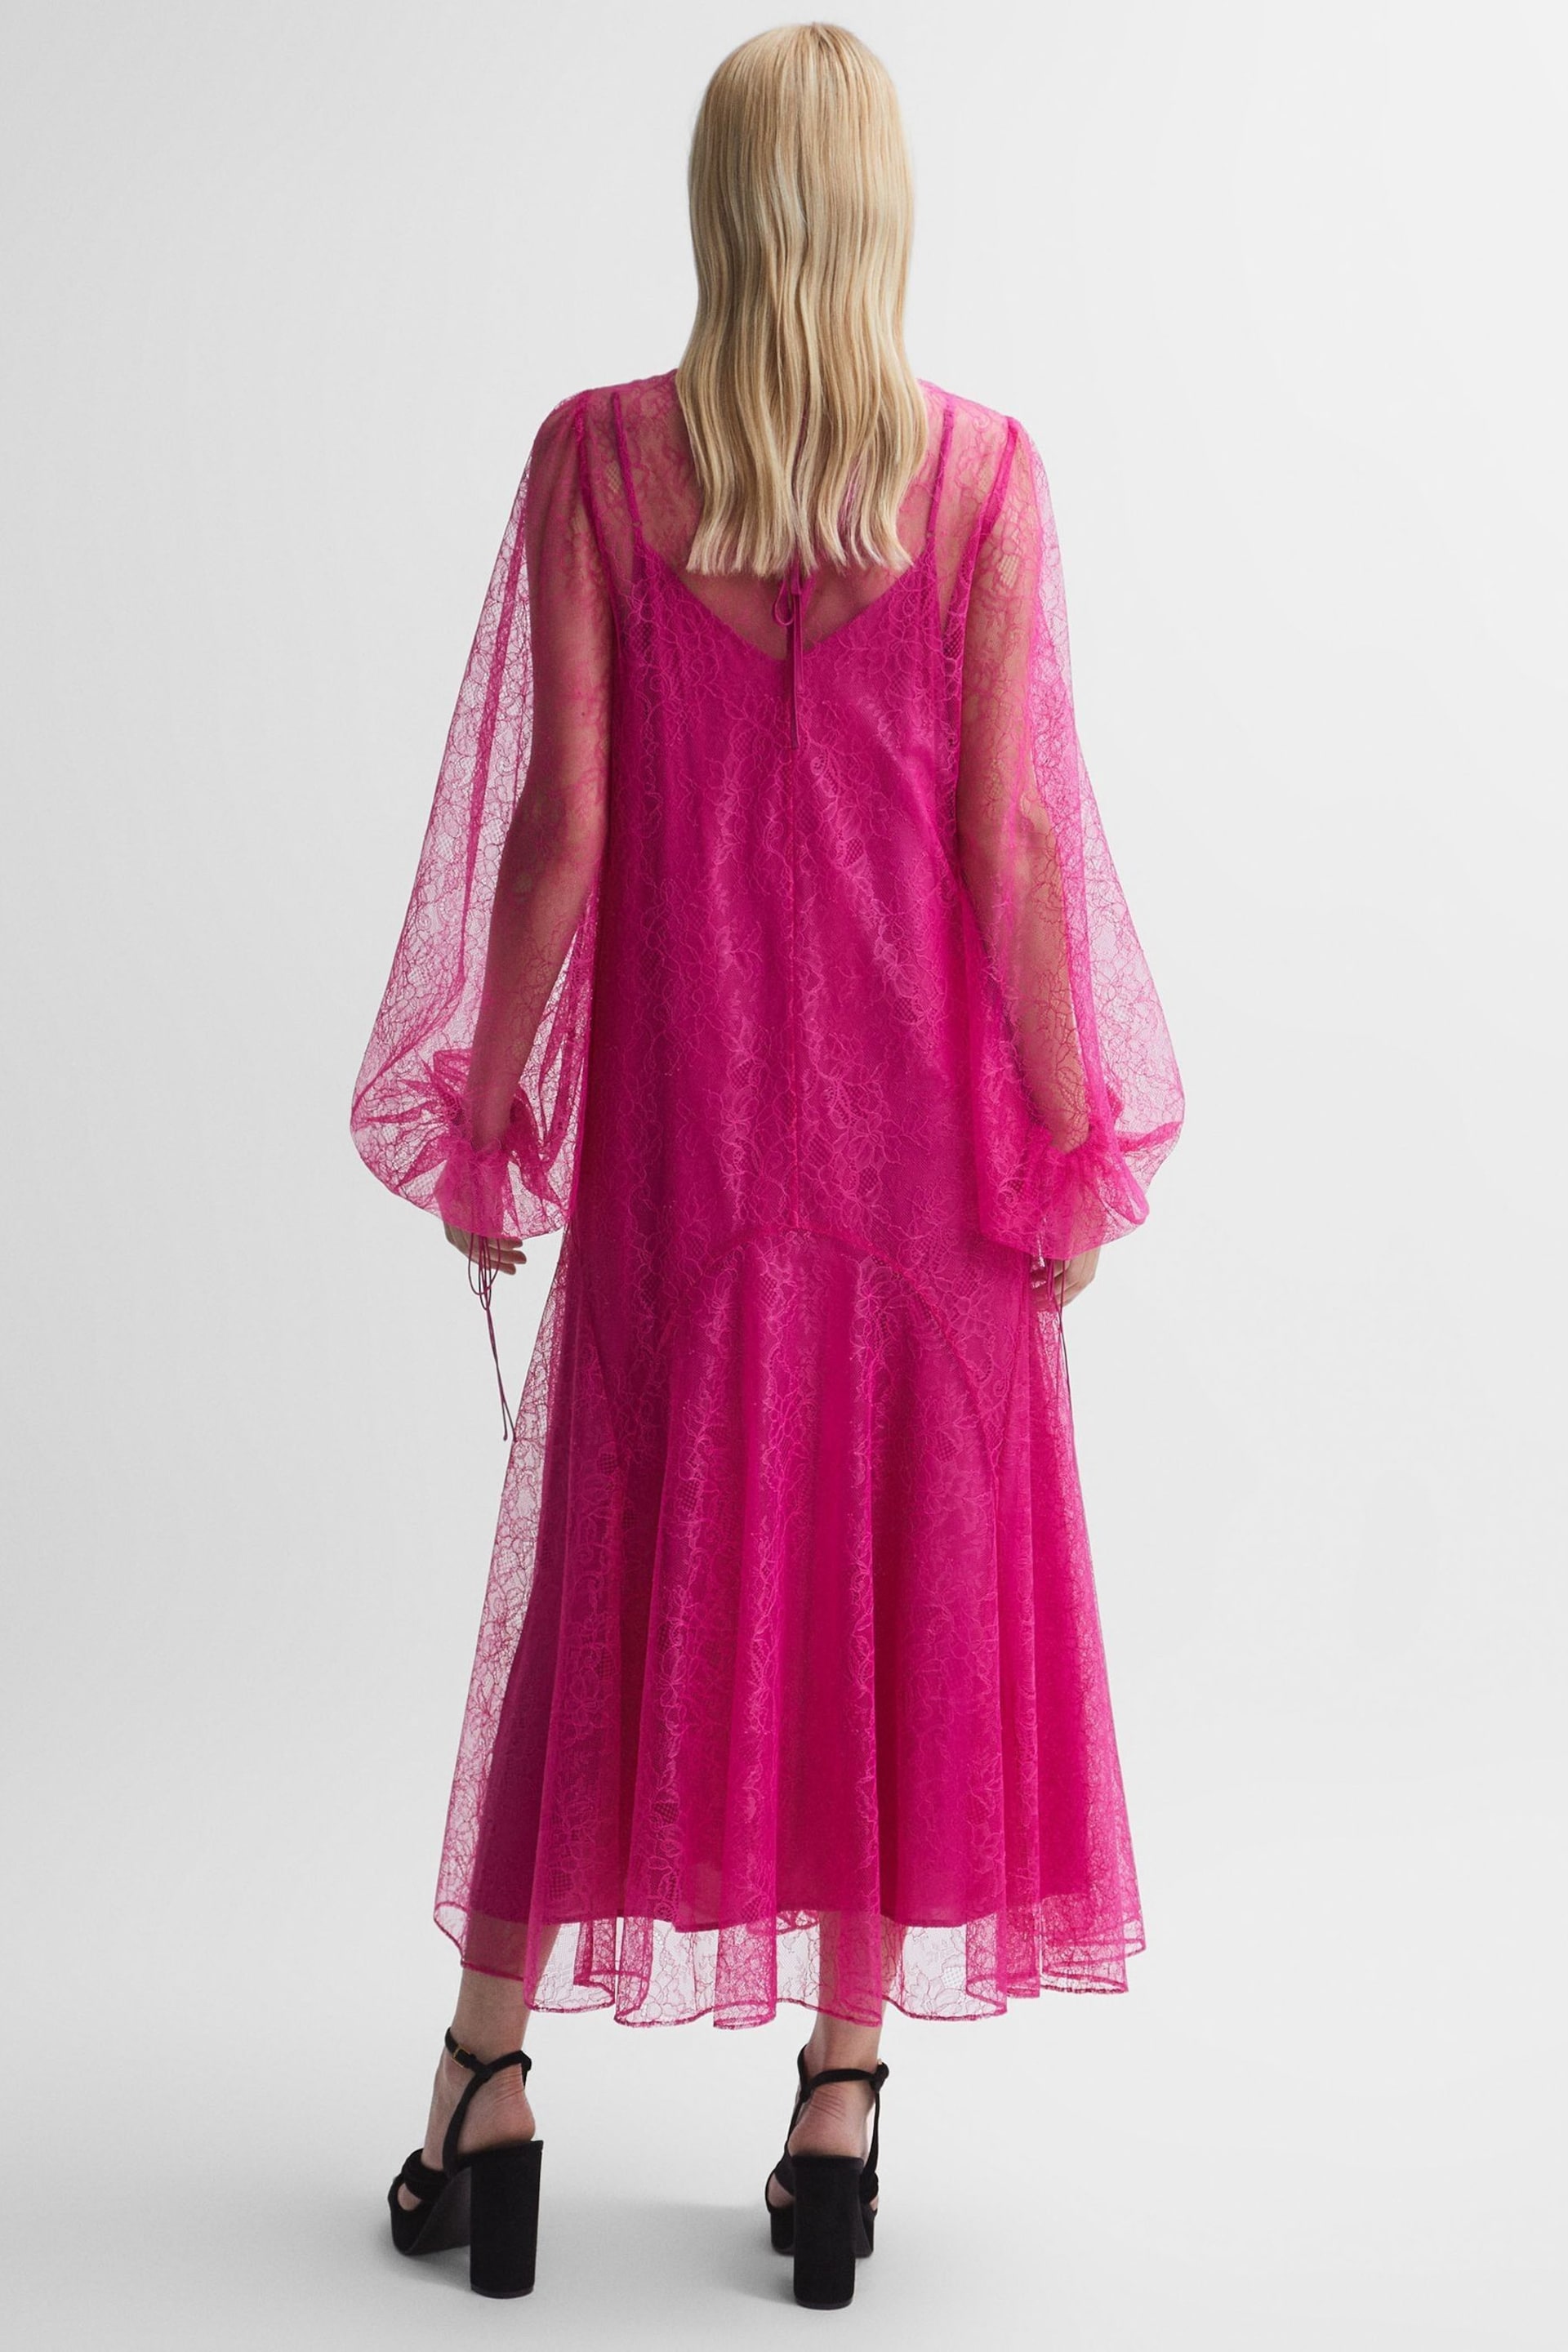 Florere Lace Midi Dress - Image 4 of 6